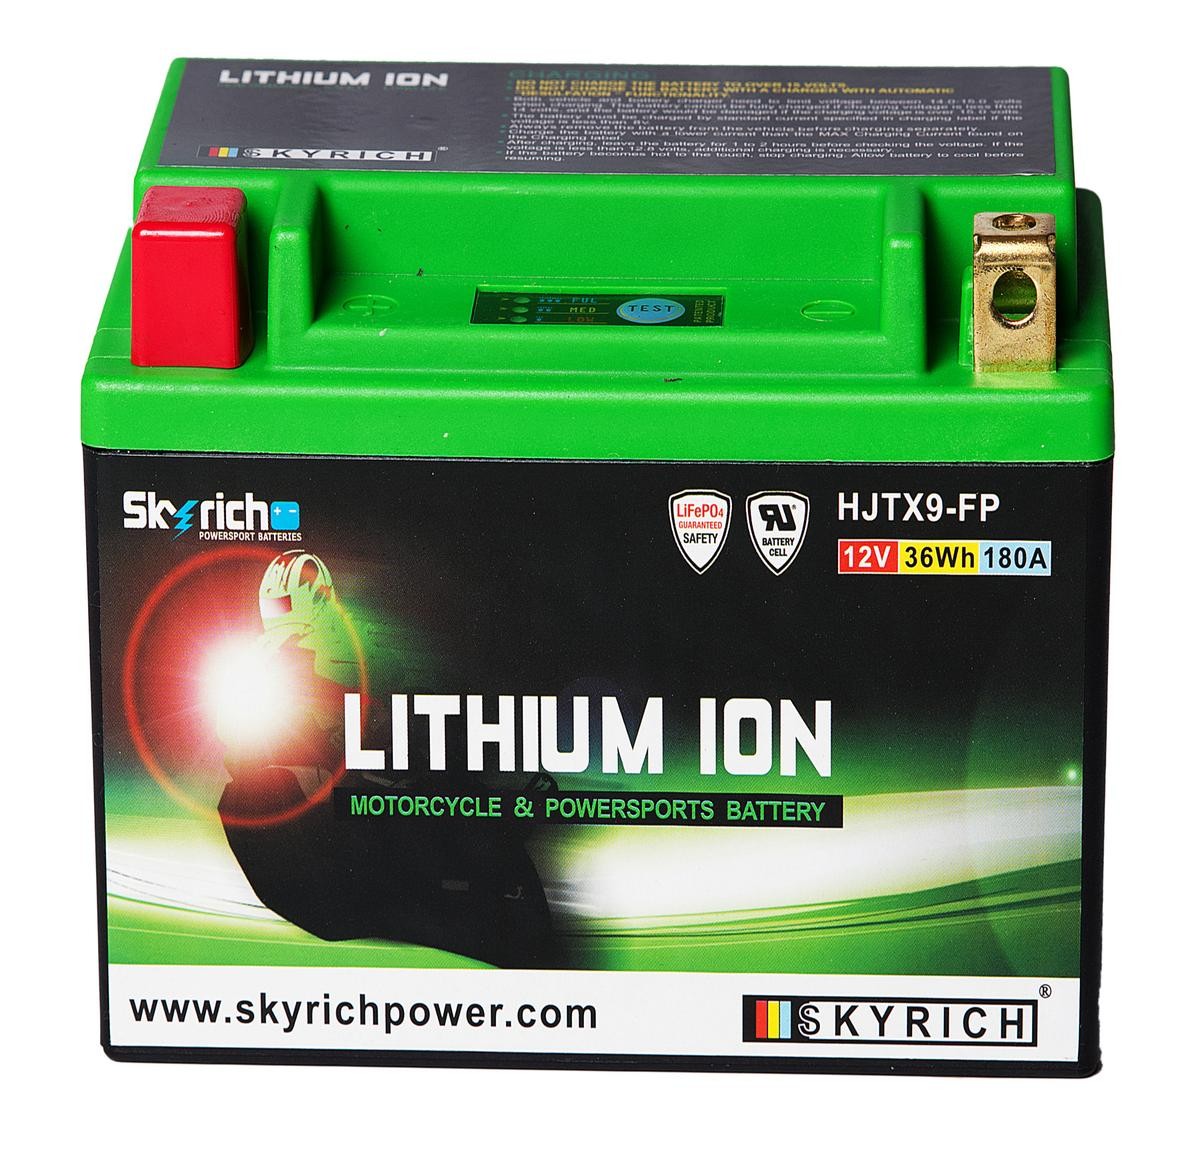 SKYRICH LITHIUM ION HJTX9-FP TRIUMPH Moped Batterie 12V 3Ah 180A N Li-Ionen-Batterie